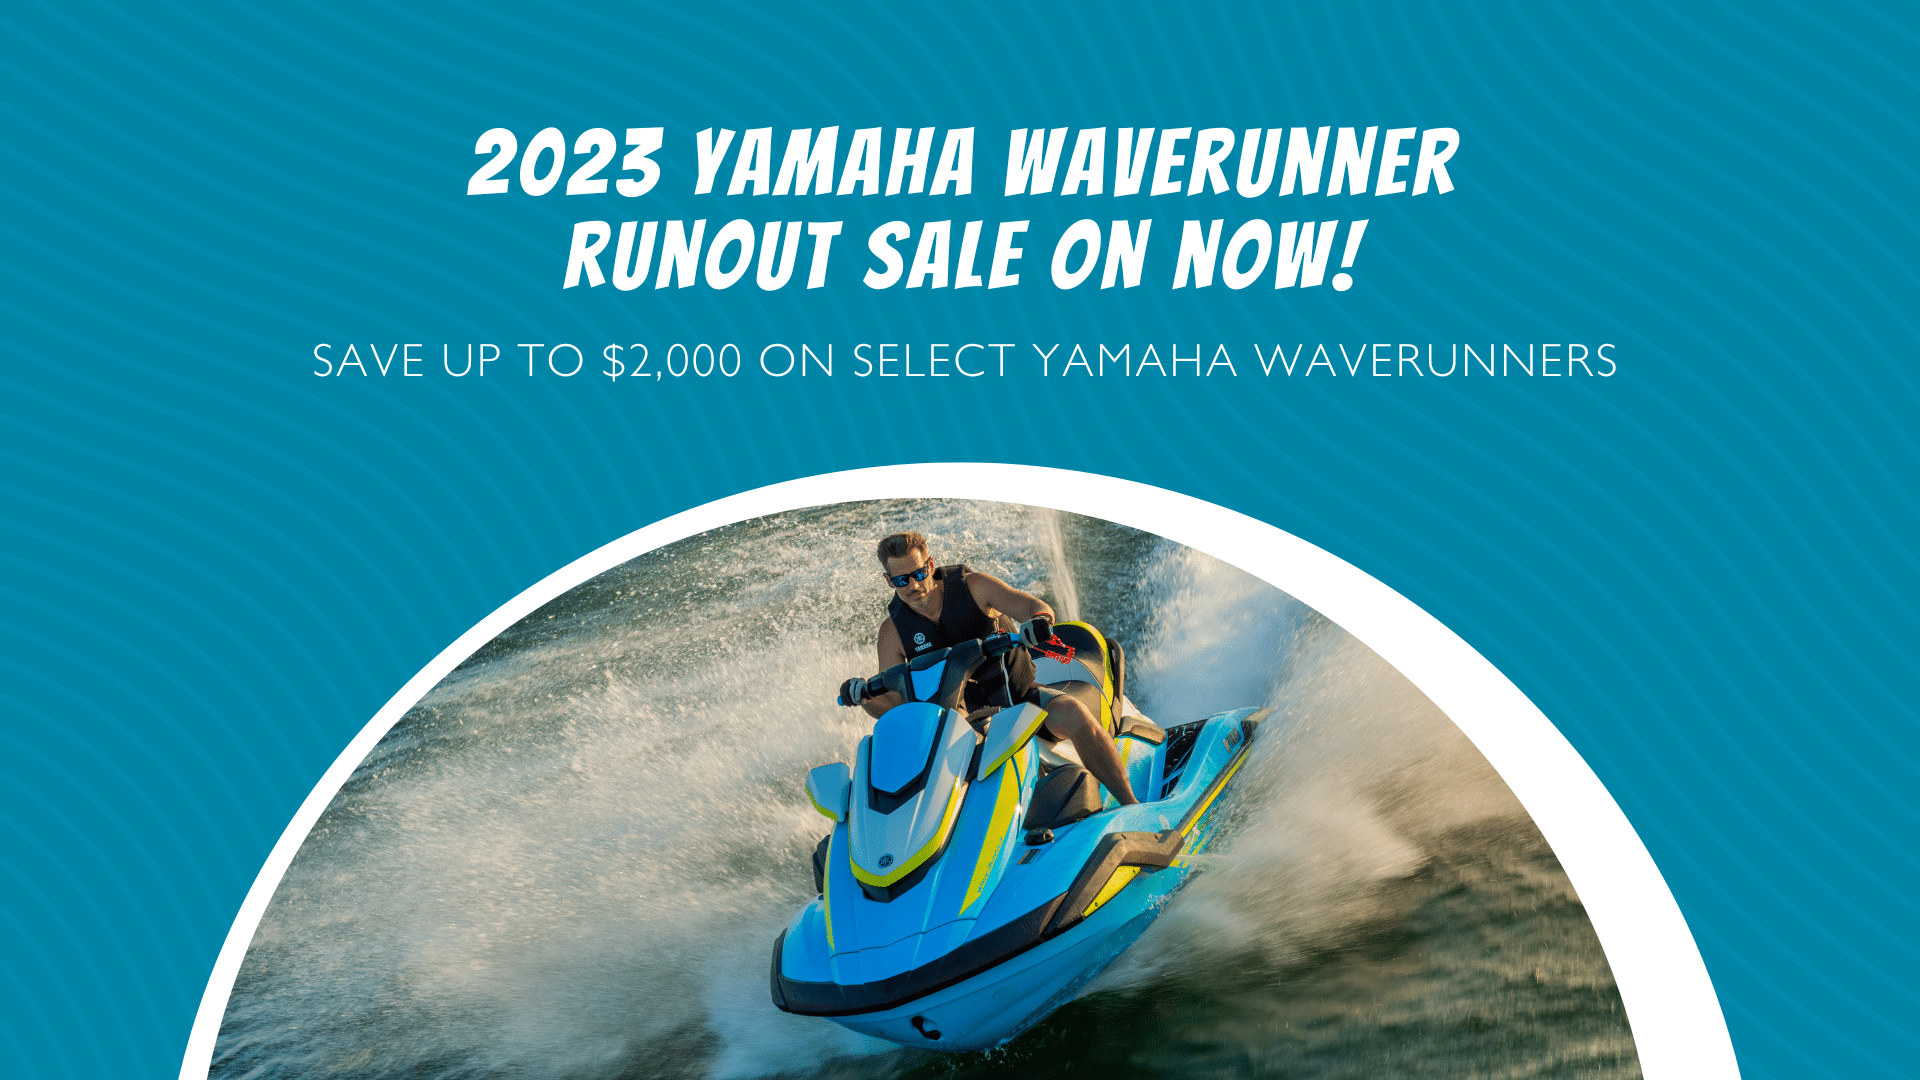 2023 yamaha waverunner runout sale on now!